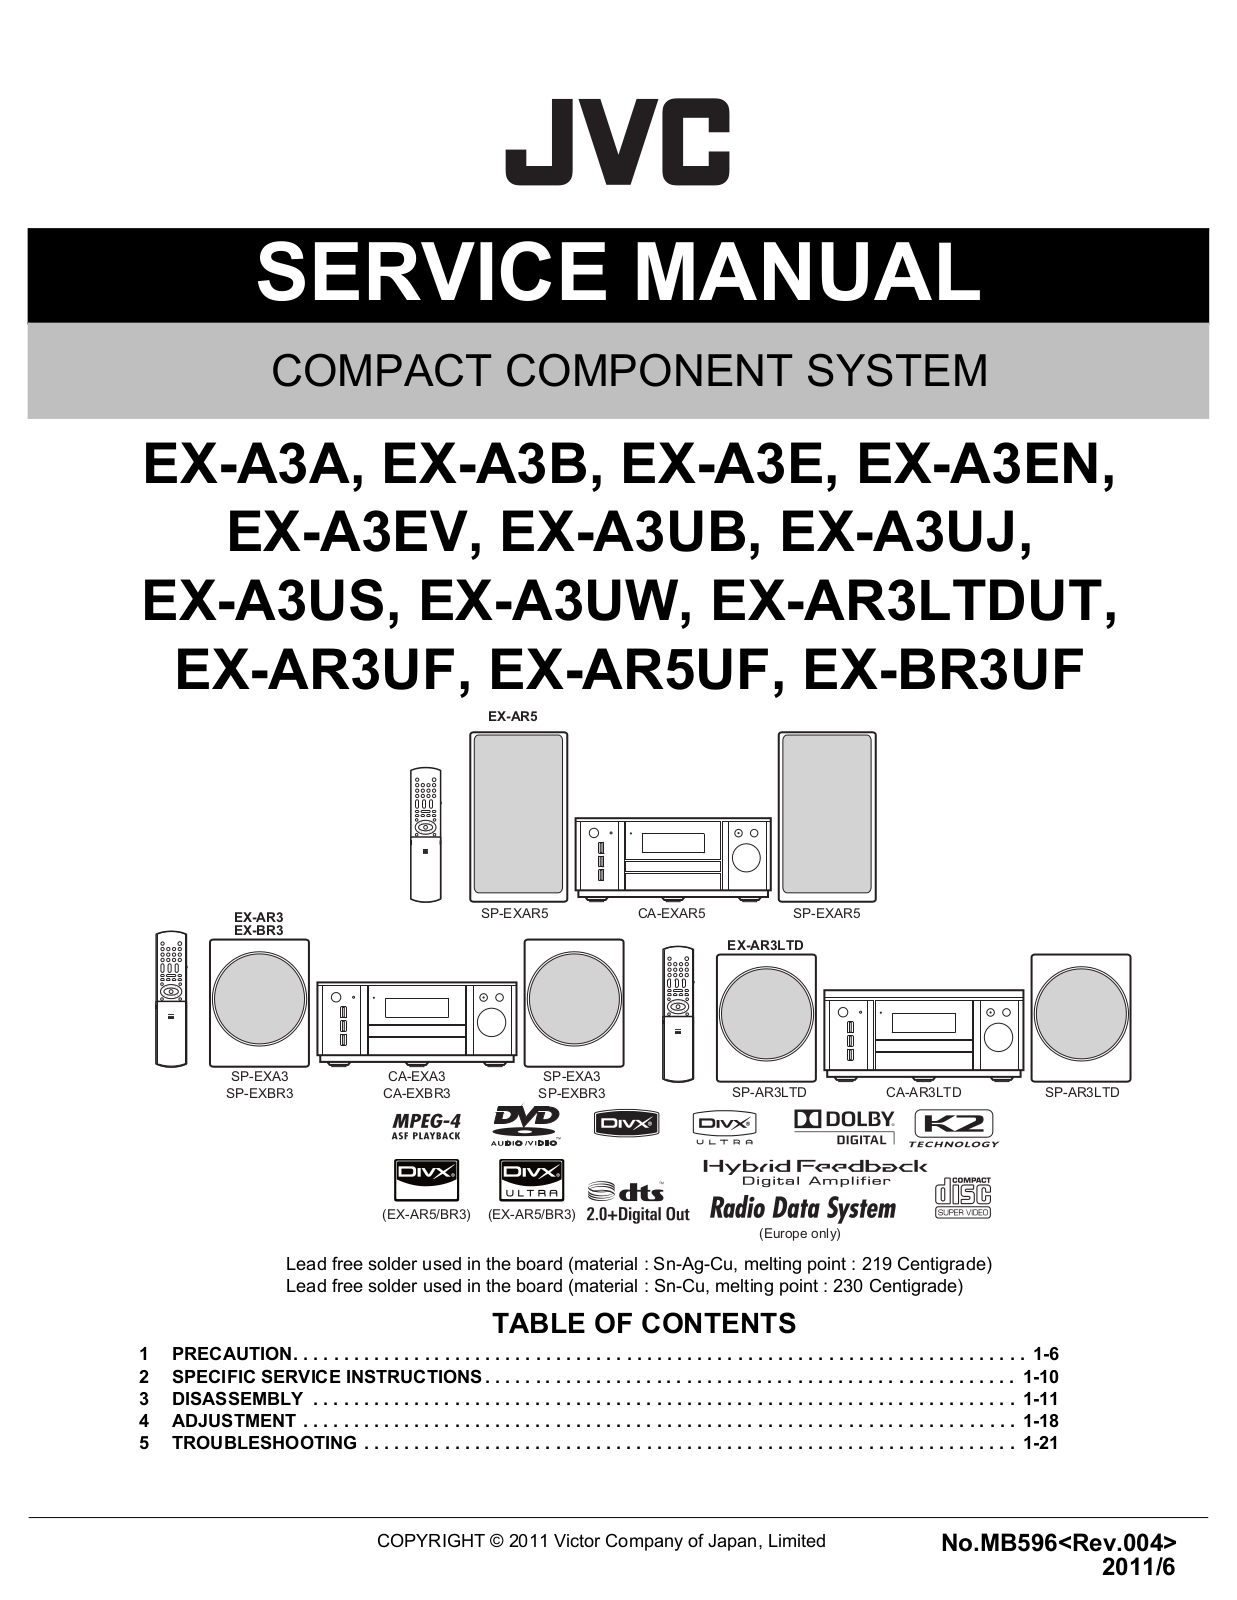 JVC EX-A3A, EX-A3B, EX-A3E, EX-A3EN, EX-A3EV Service Manual